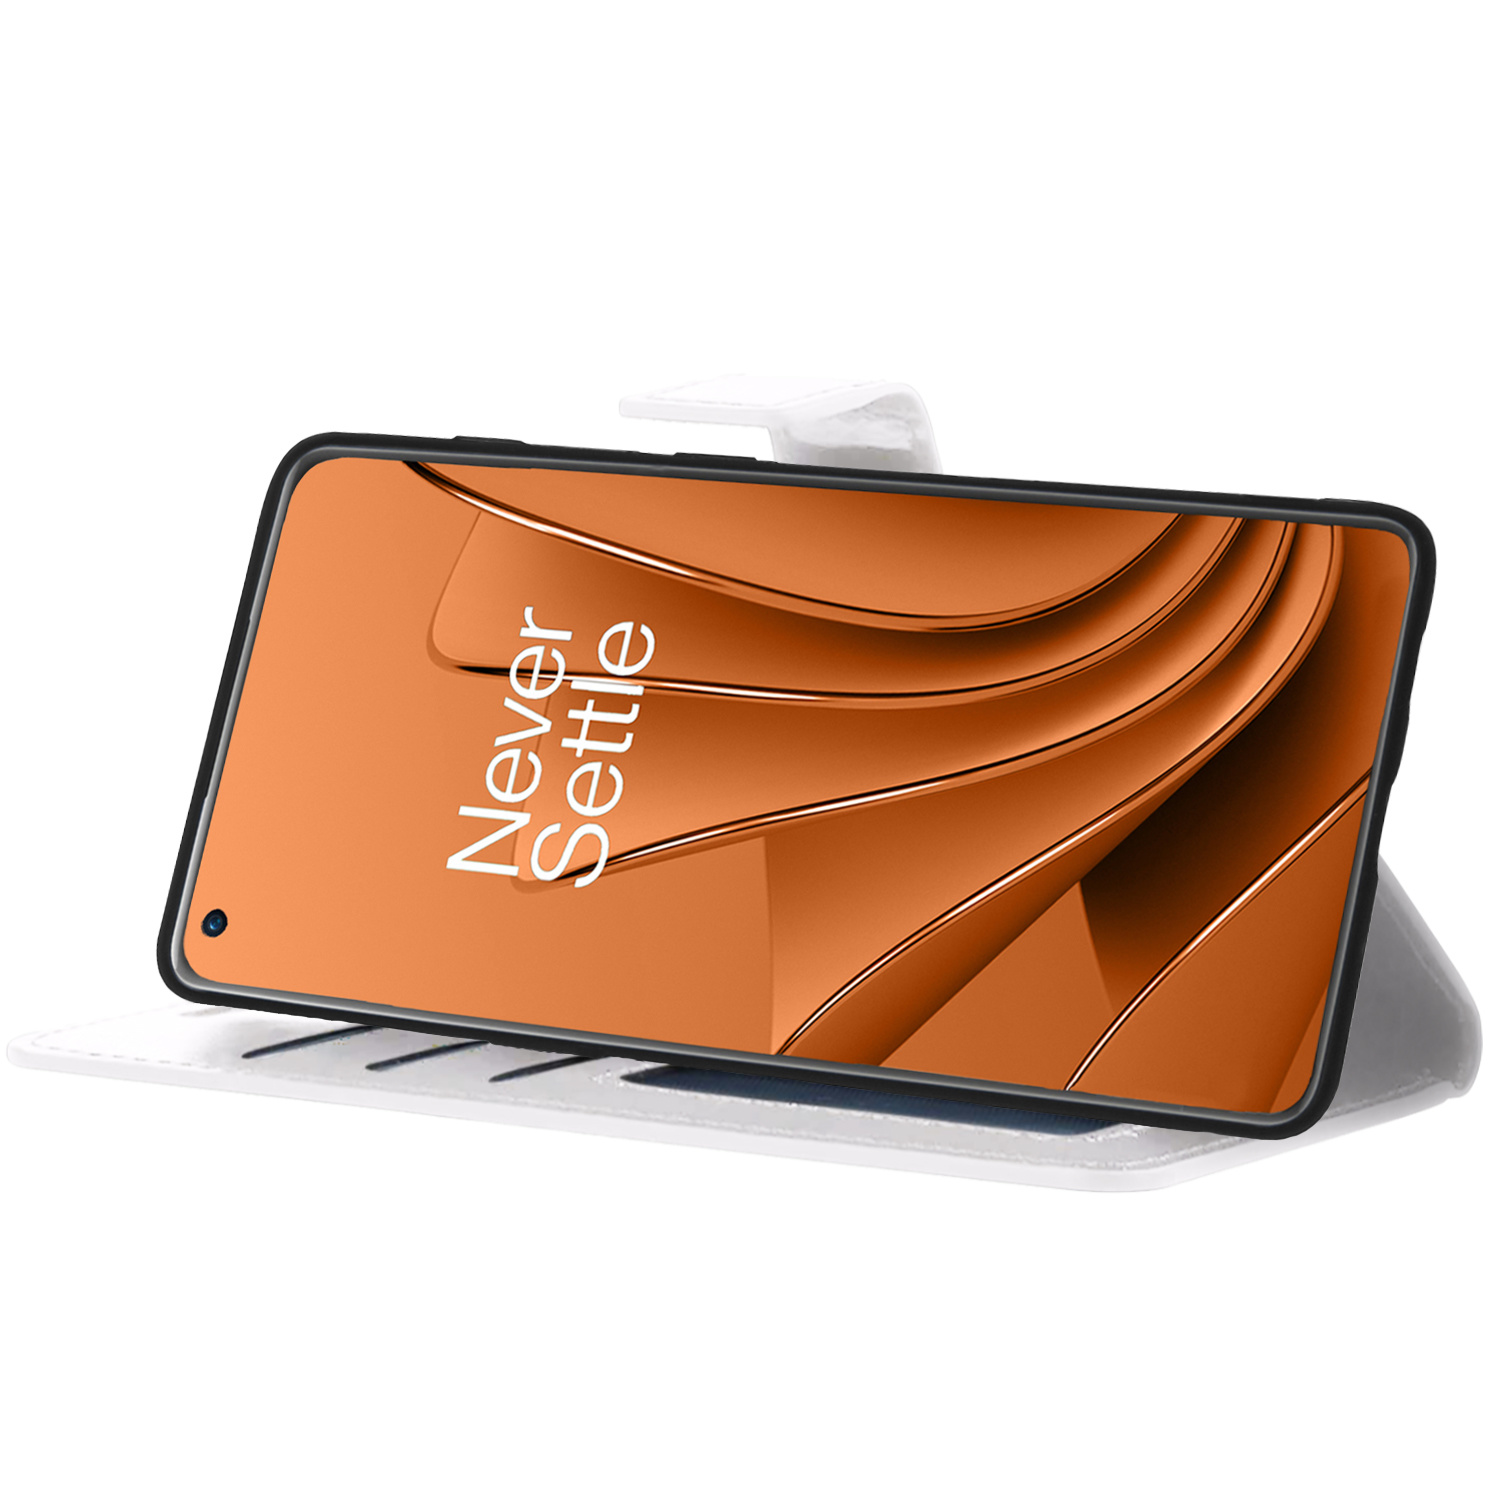 Nomfy OnePlus 10 Pro Hoes Bookcase Wit - Flipcase Wit - OnePlus 10 Pro Book Cover - OnePlus 10 Pro Hoesje Wit